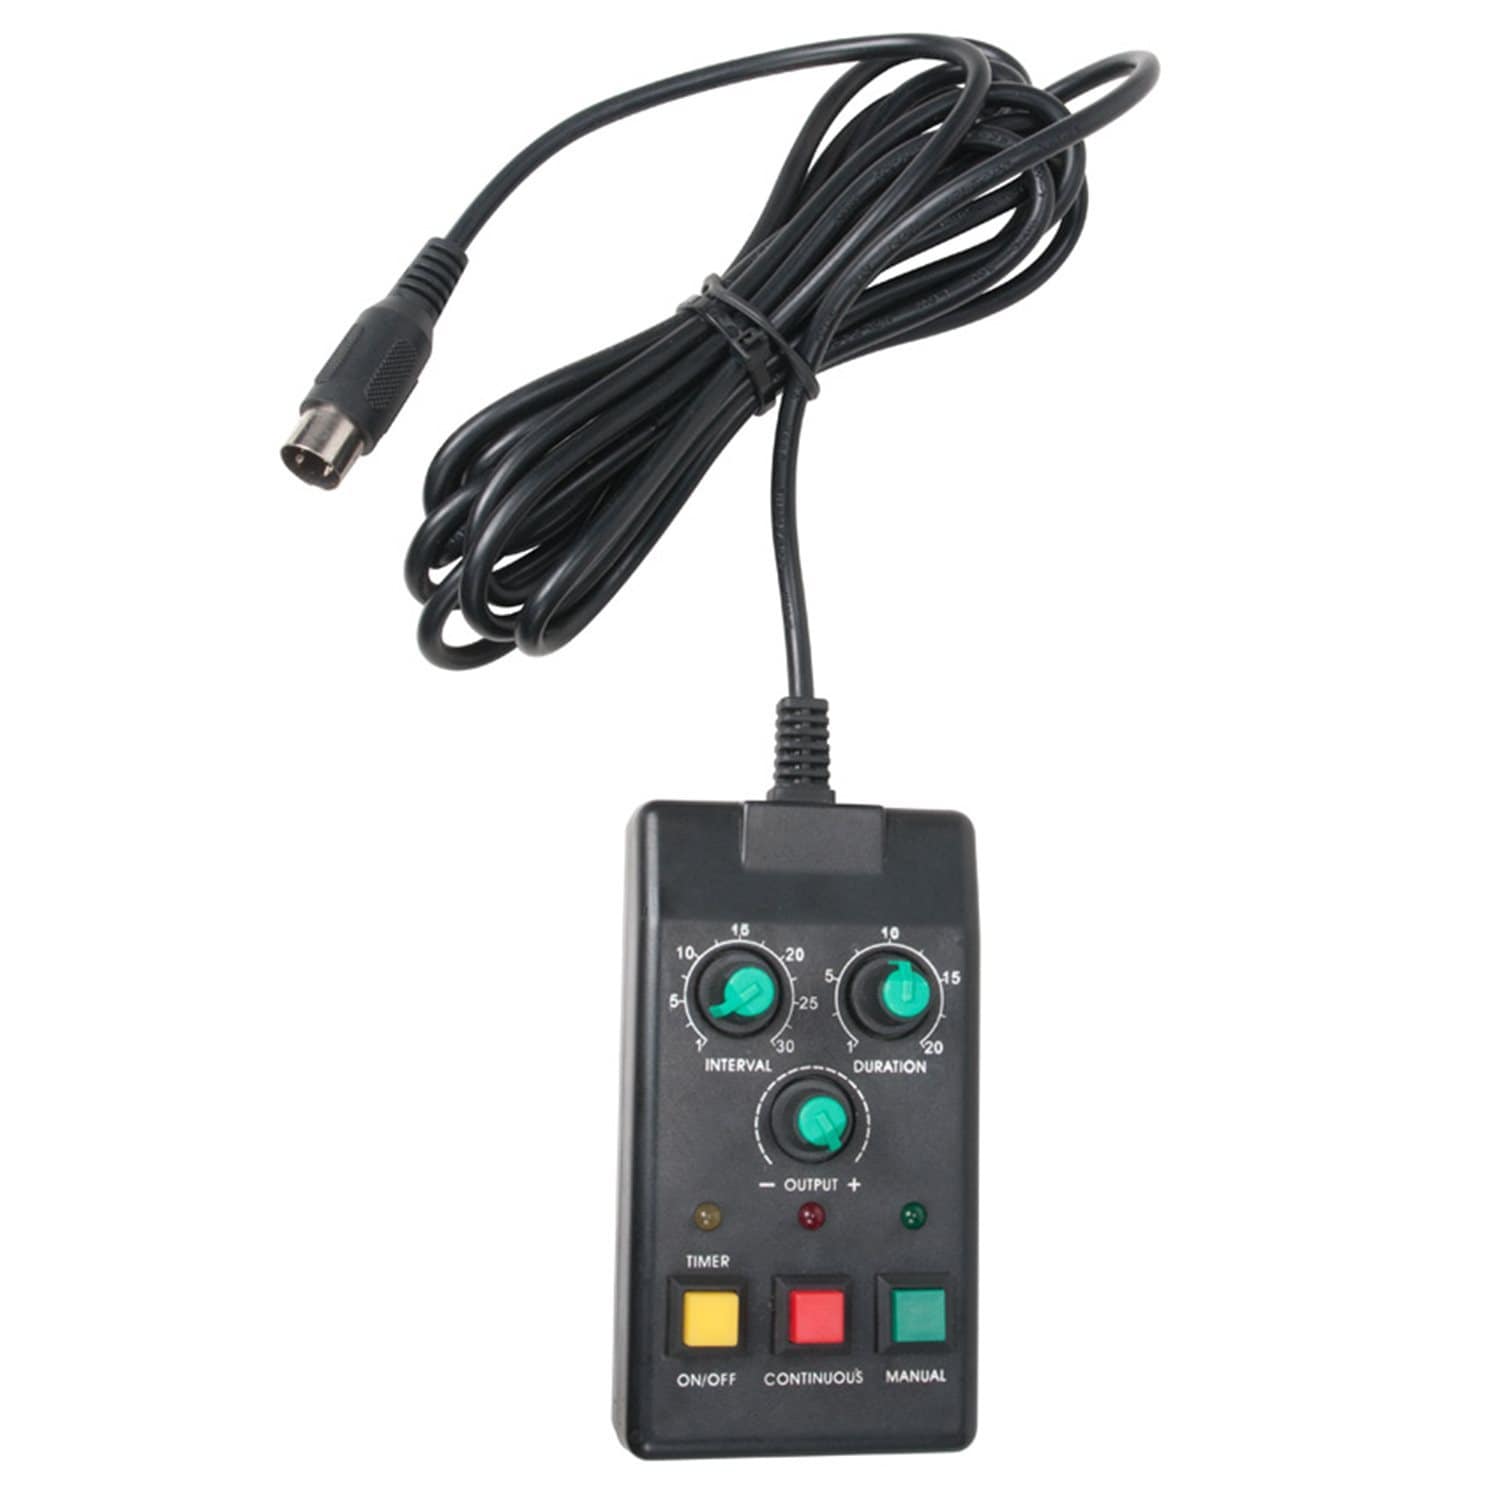 ADJ American DJ VF1600 DMX Fog Machine with Remote - PSSL ProSound and Stage Lighting